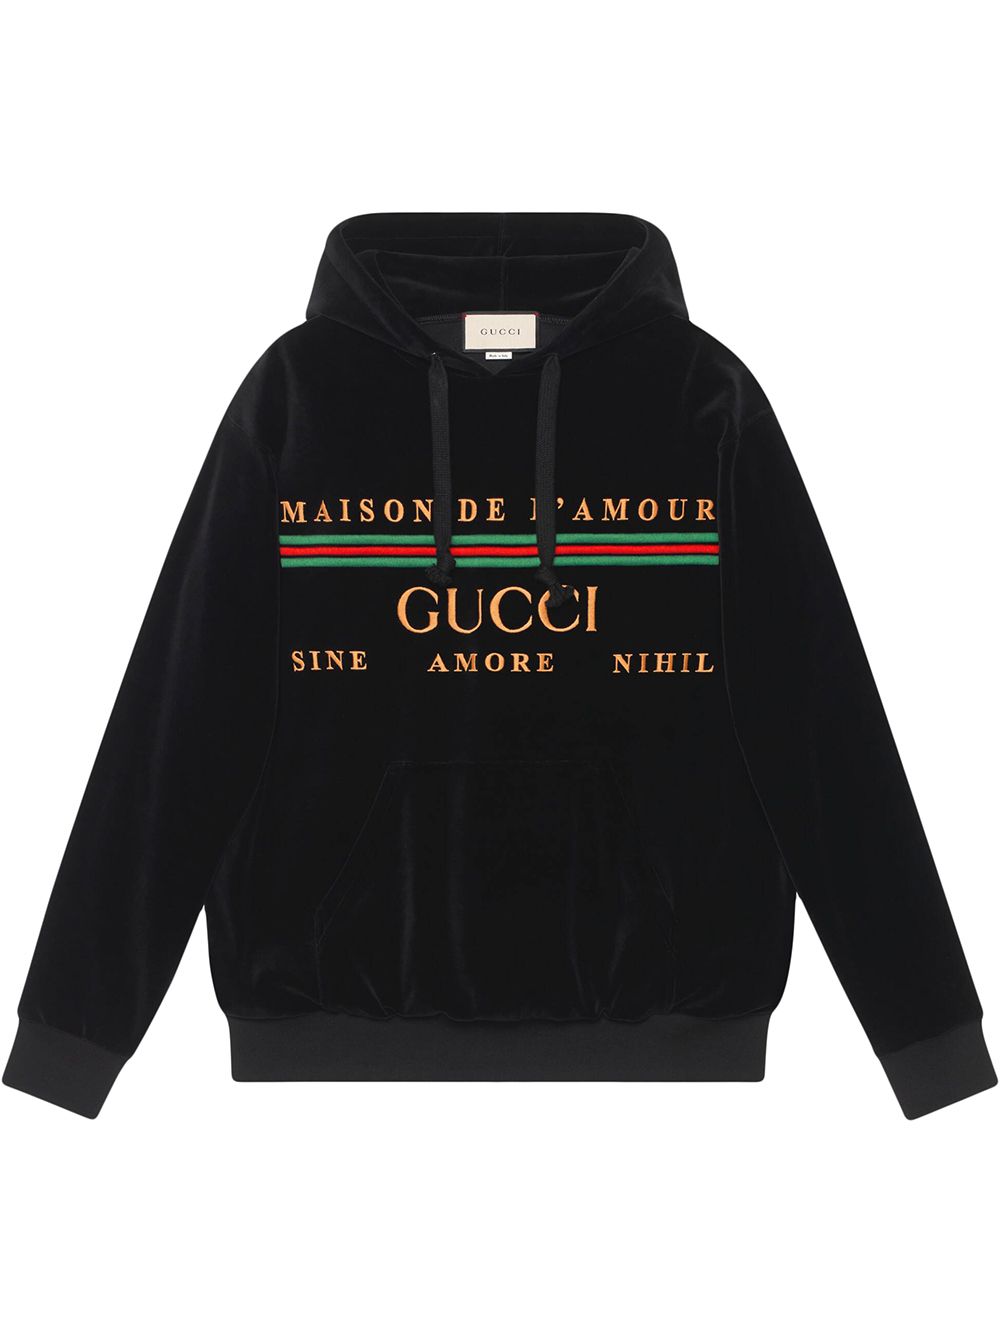 фото Gucci худи с вышитым логотипом